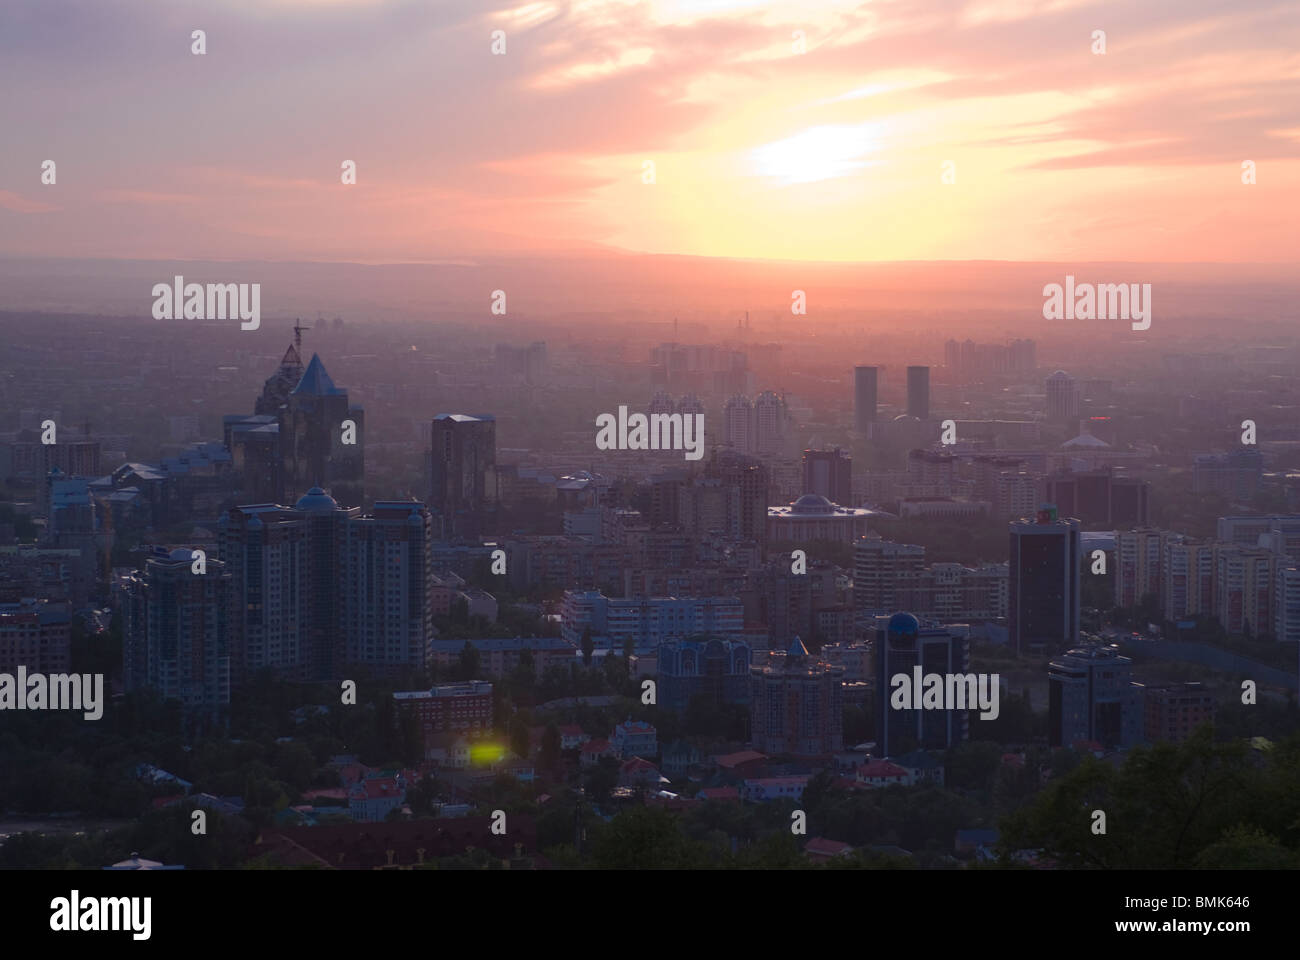 Skyline of Almaty at sunset, Kazakhstan Stock Photo